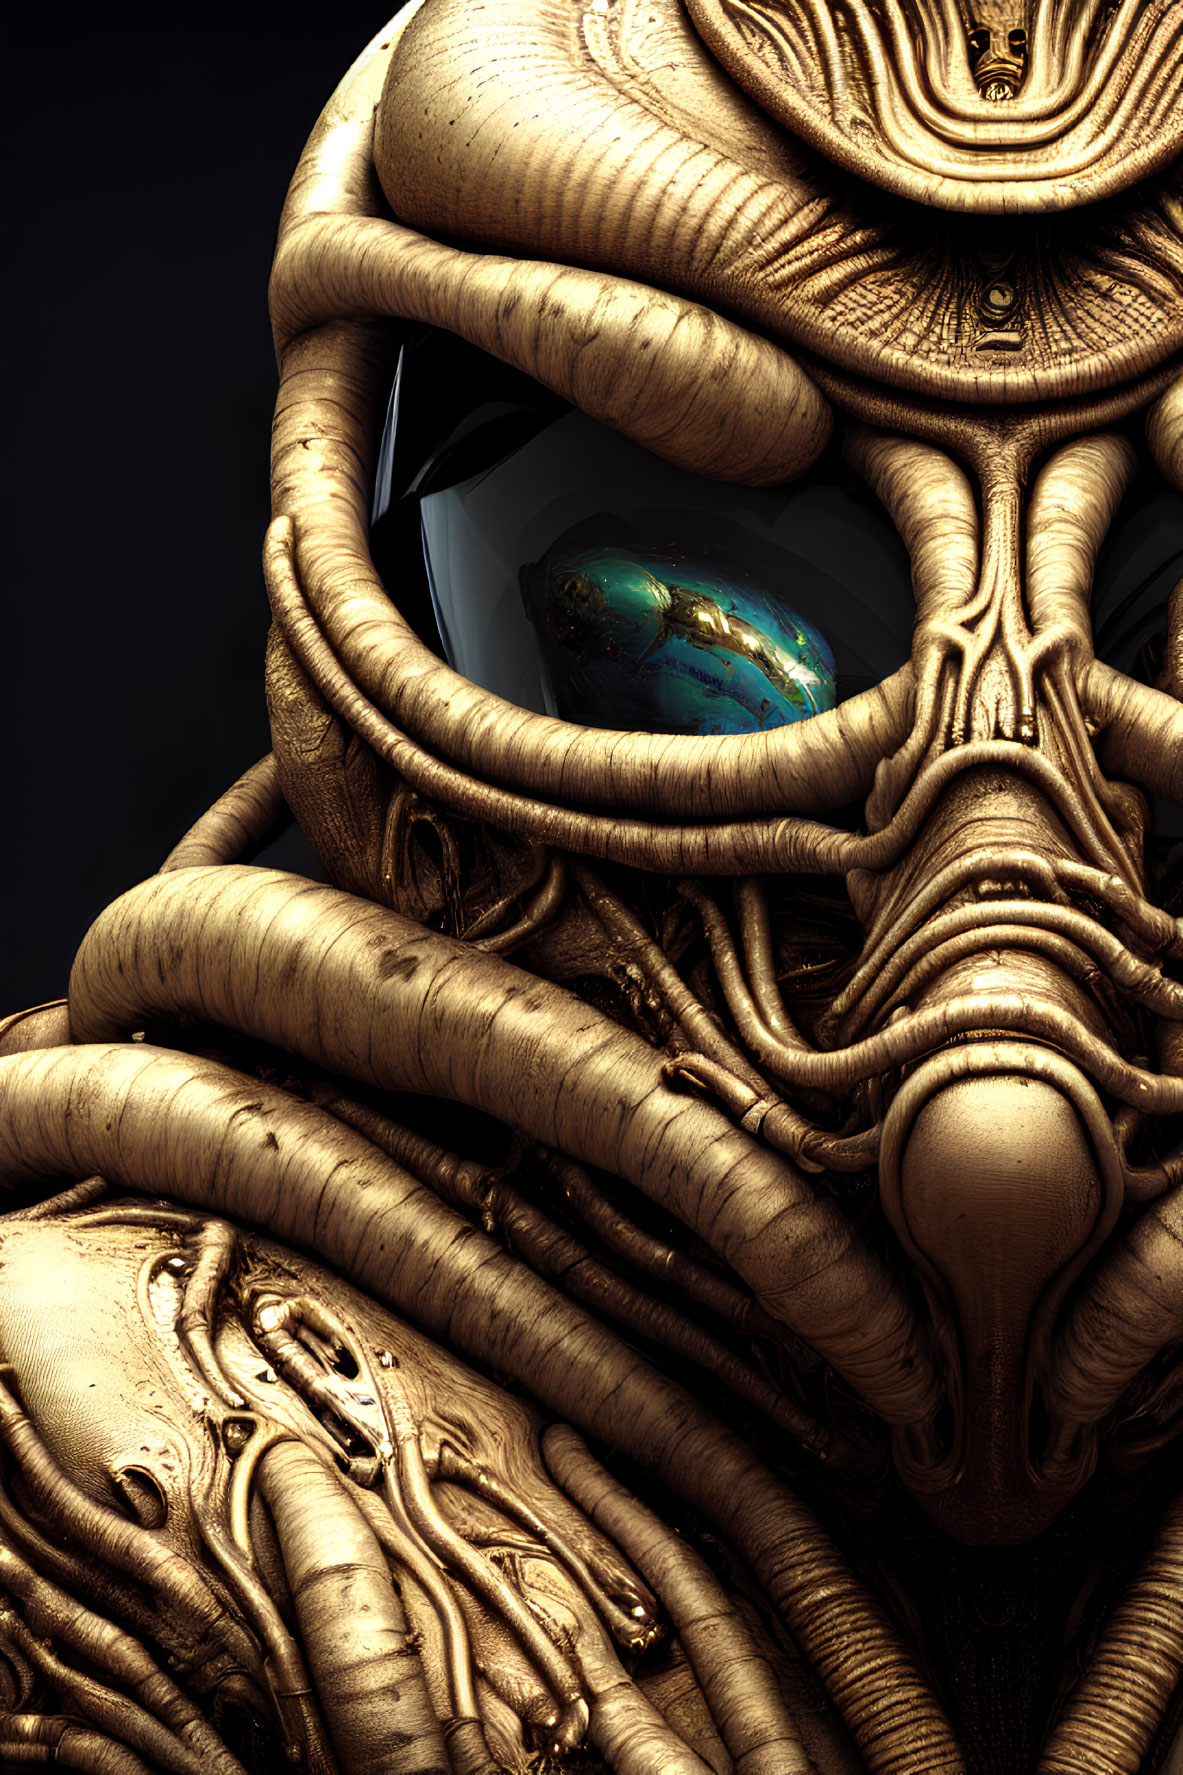 Digital artwork of humanoid figure with ornate golden tentacles & blue eye